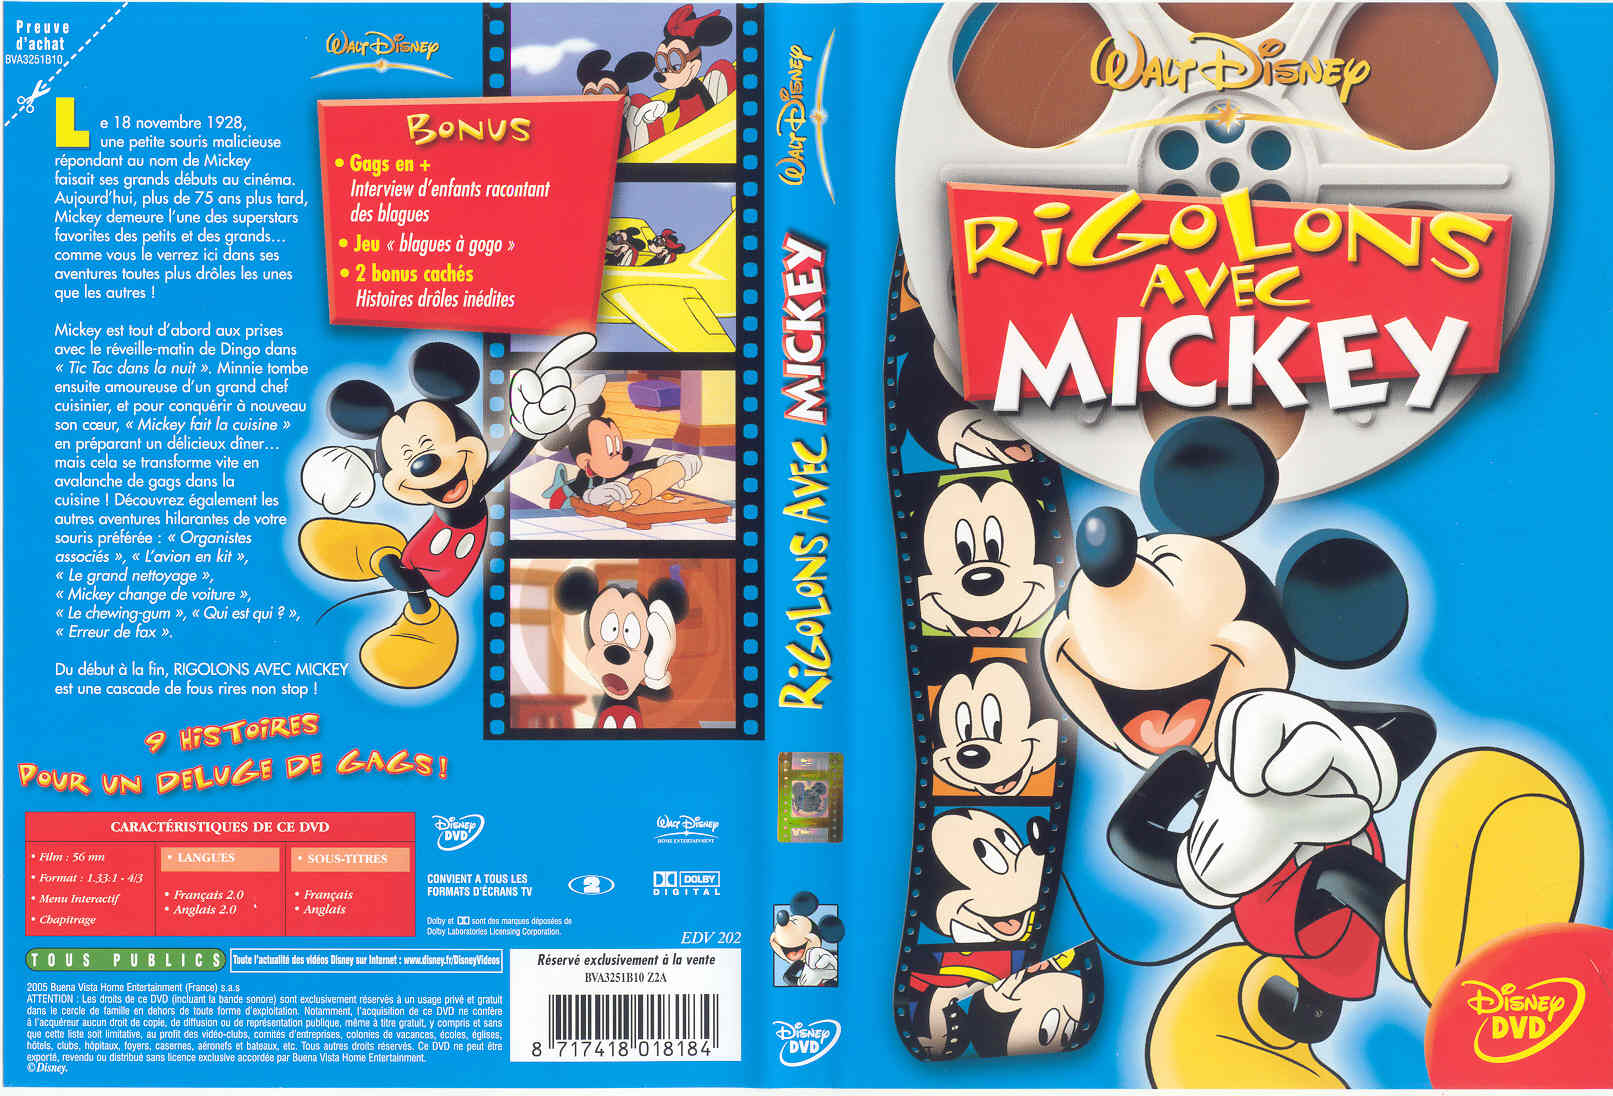 Jaquette DVD Mickey rigolons avec Mickey